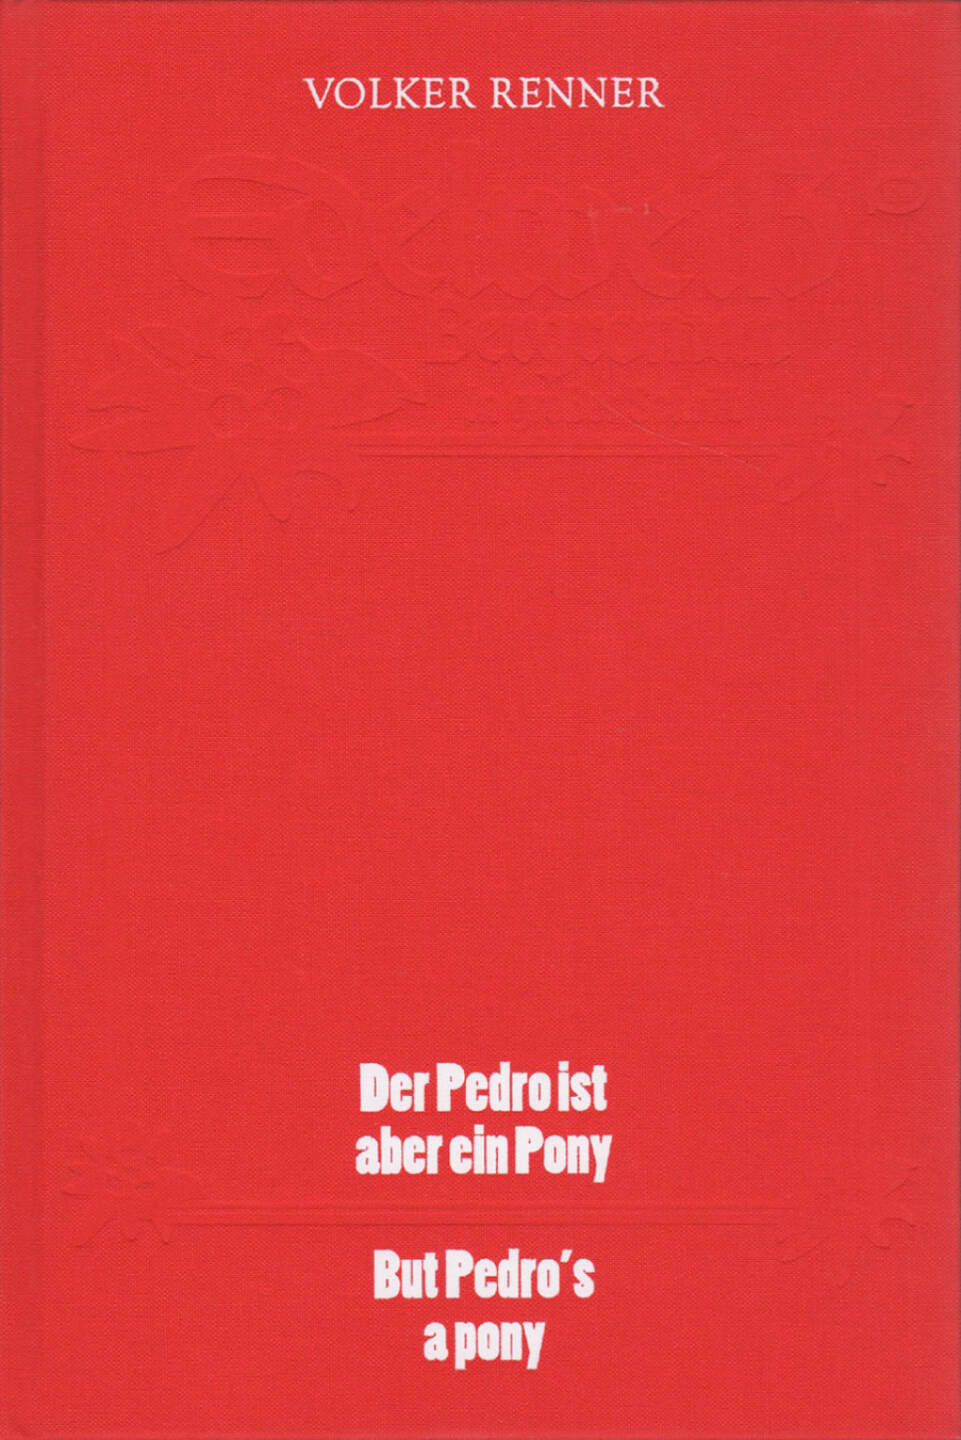 Volker Renner - Der Pedro ist aber ein Pony - But Pedro’s a pony, Textem Verlag 2015, Cover - http://josefchladek.com/book/volker_renner_-_der_pedro_ist_aber_ein_pony_-_but_pedros_a_pony